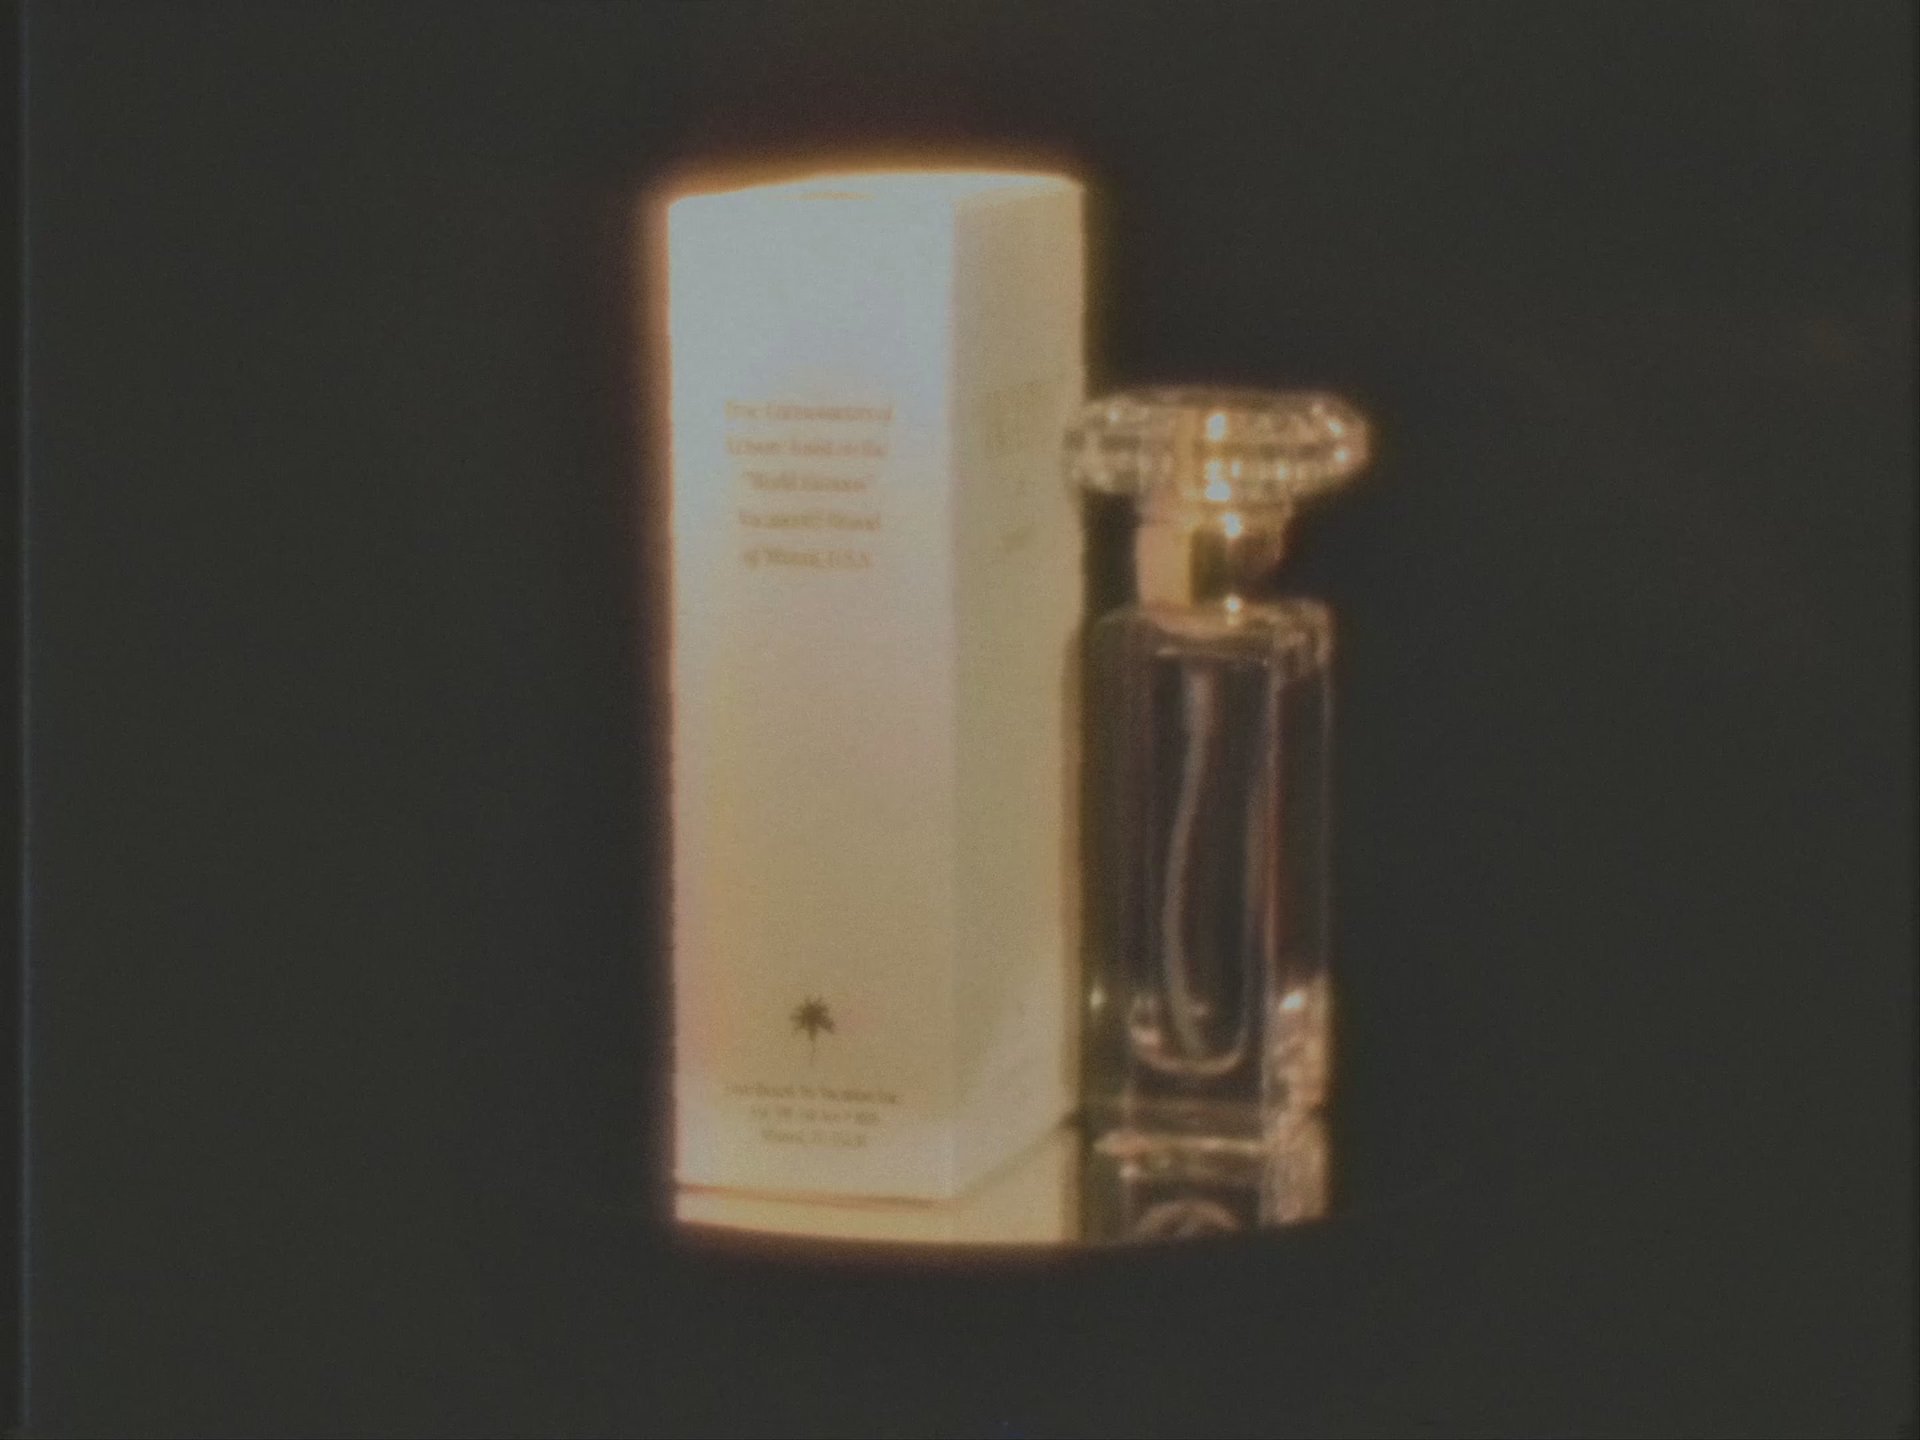 ENGLISH Golden Sand Crown Perfumes Arabian Perfume Oil Fragrance Review 